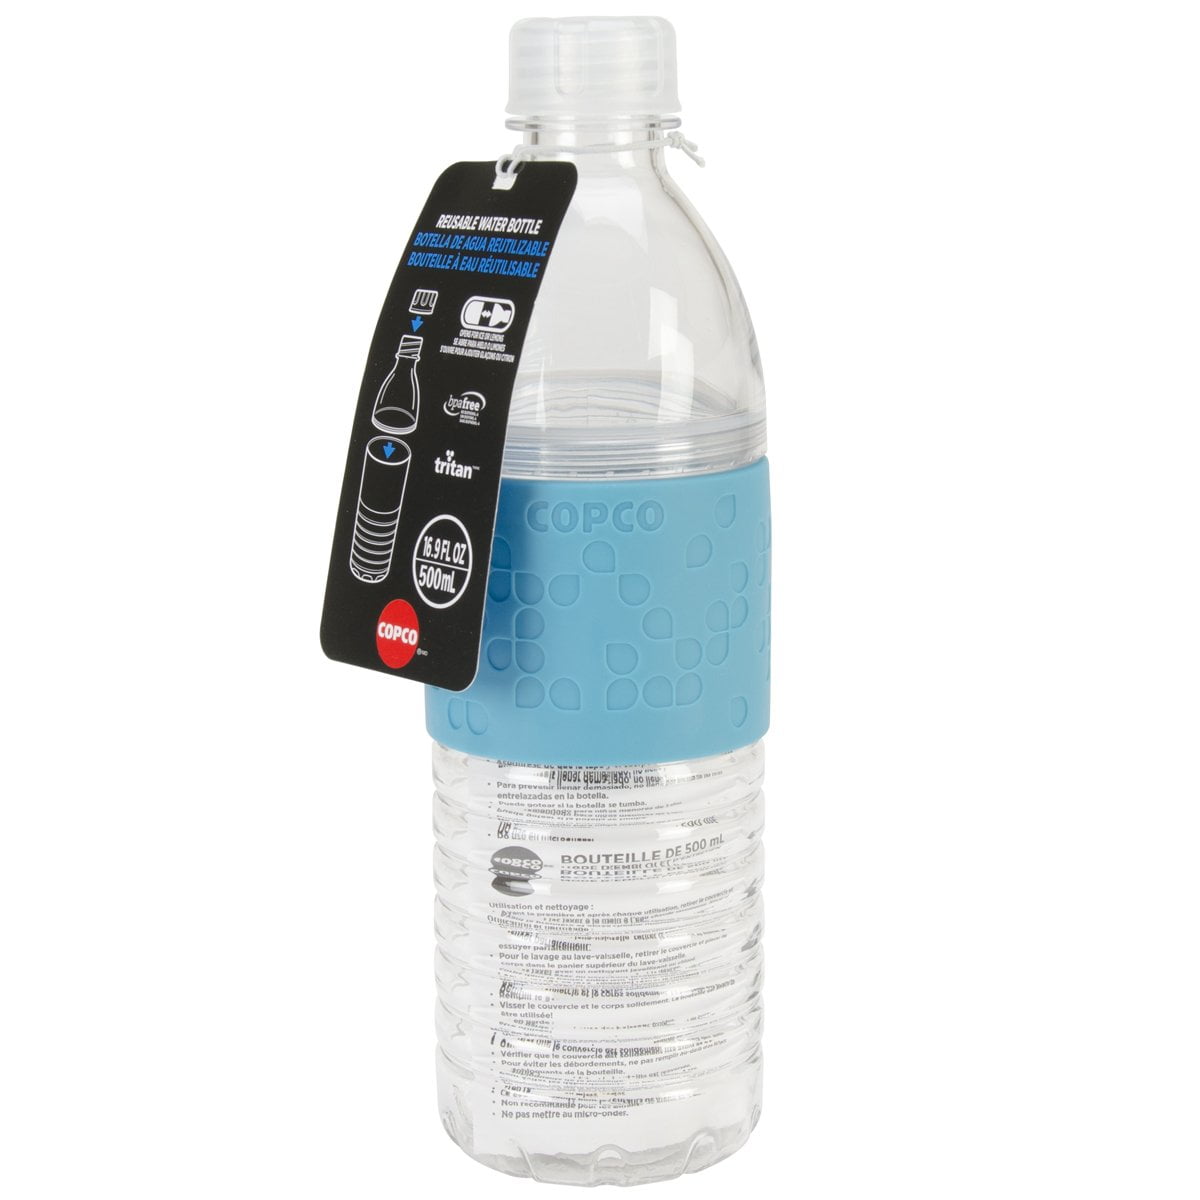 Nike Unisex – Adult's Tr Hypercharge Shaker Bottle Drinking